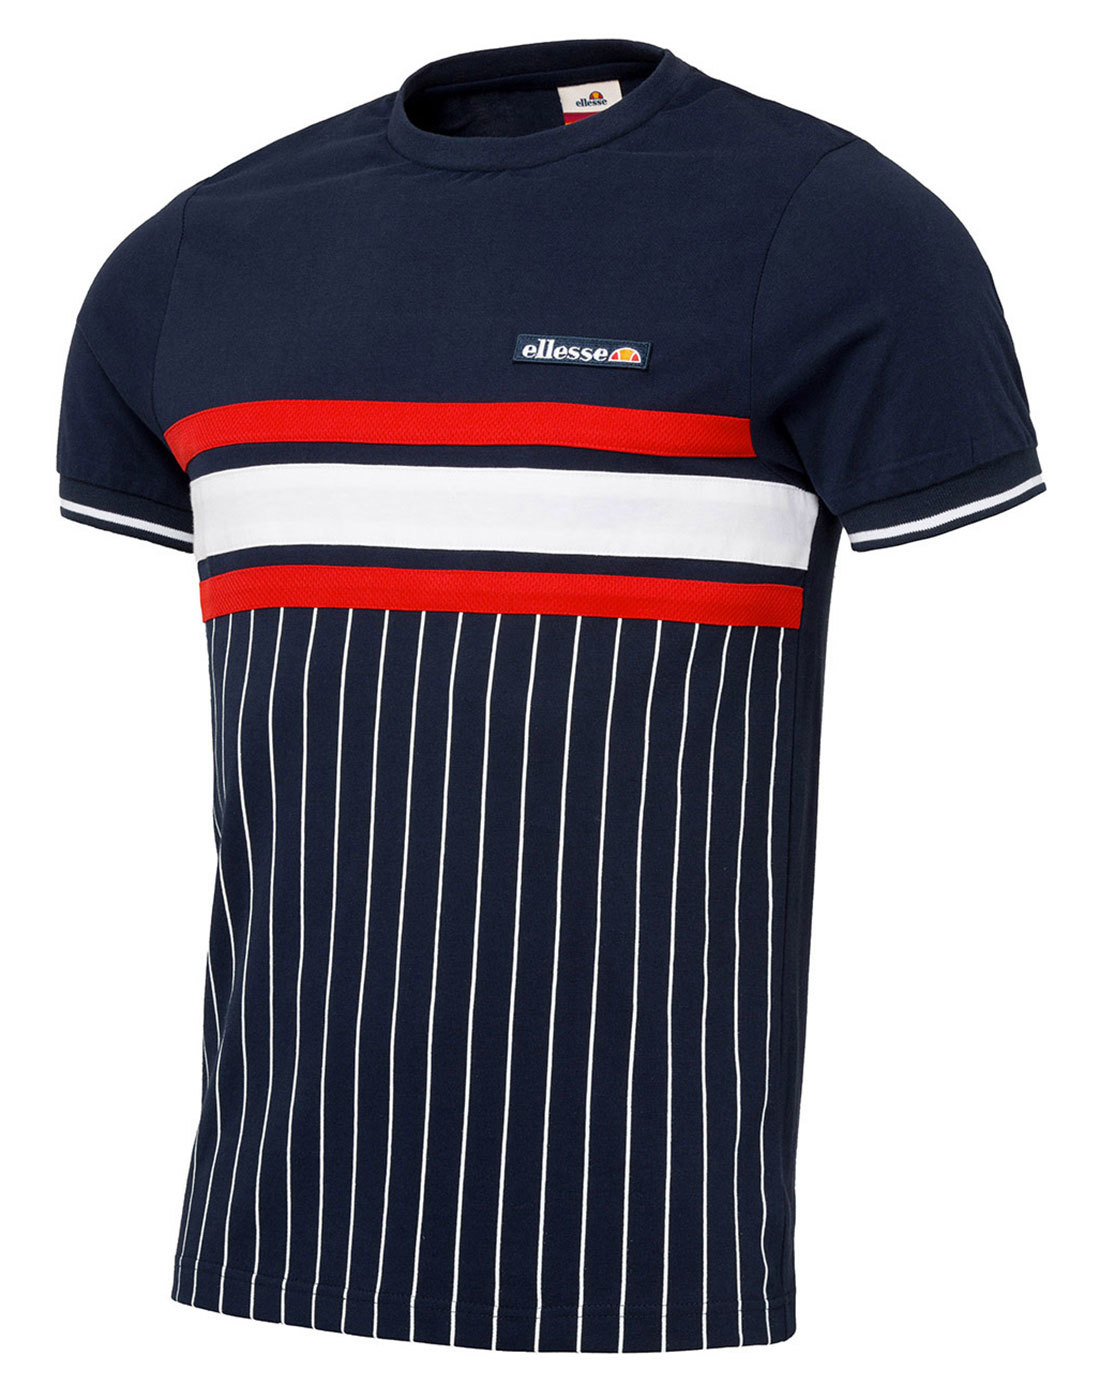 Volandri ELLESSE Retro 70s Pinstripe Panel T-Shirt